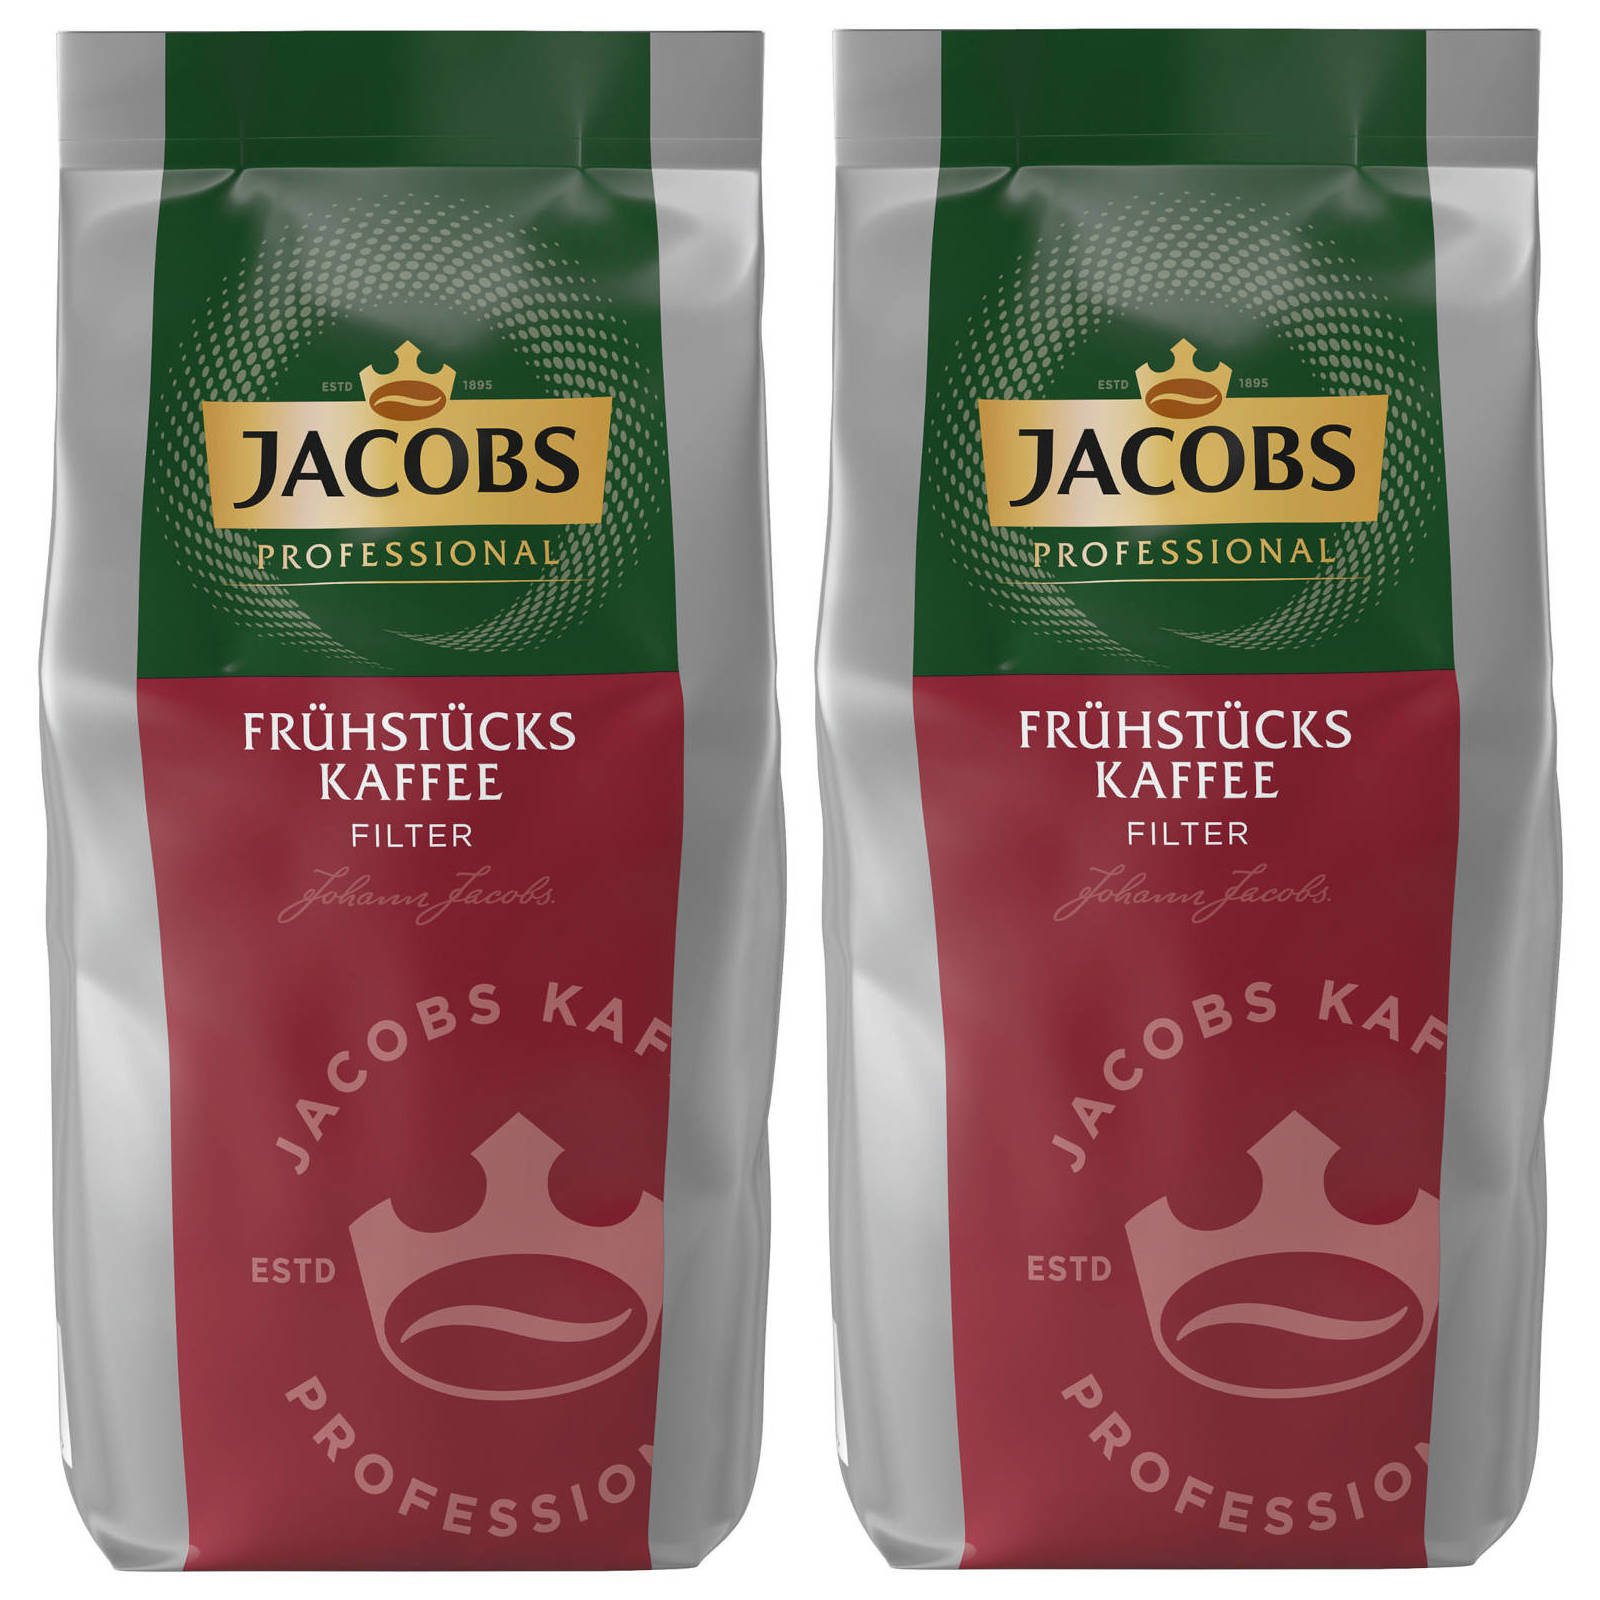 (Filtermaschinen, Press) Filterkaffee 2x1 kg French JACOBS Professional Frühstückskaffee